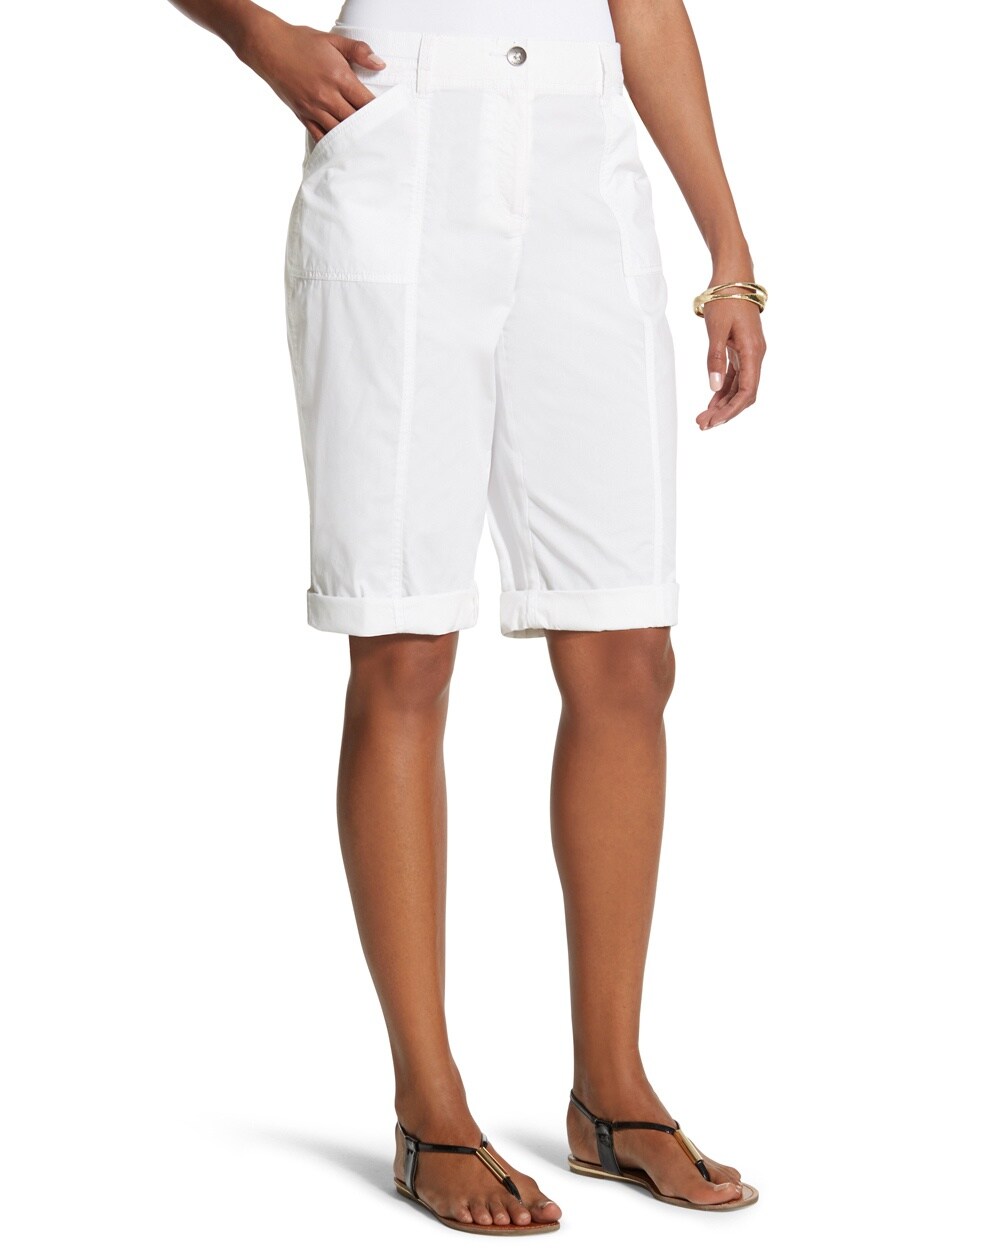 Cool Cotton Shorts - 13-inch inseam